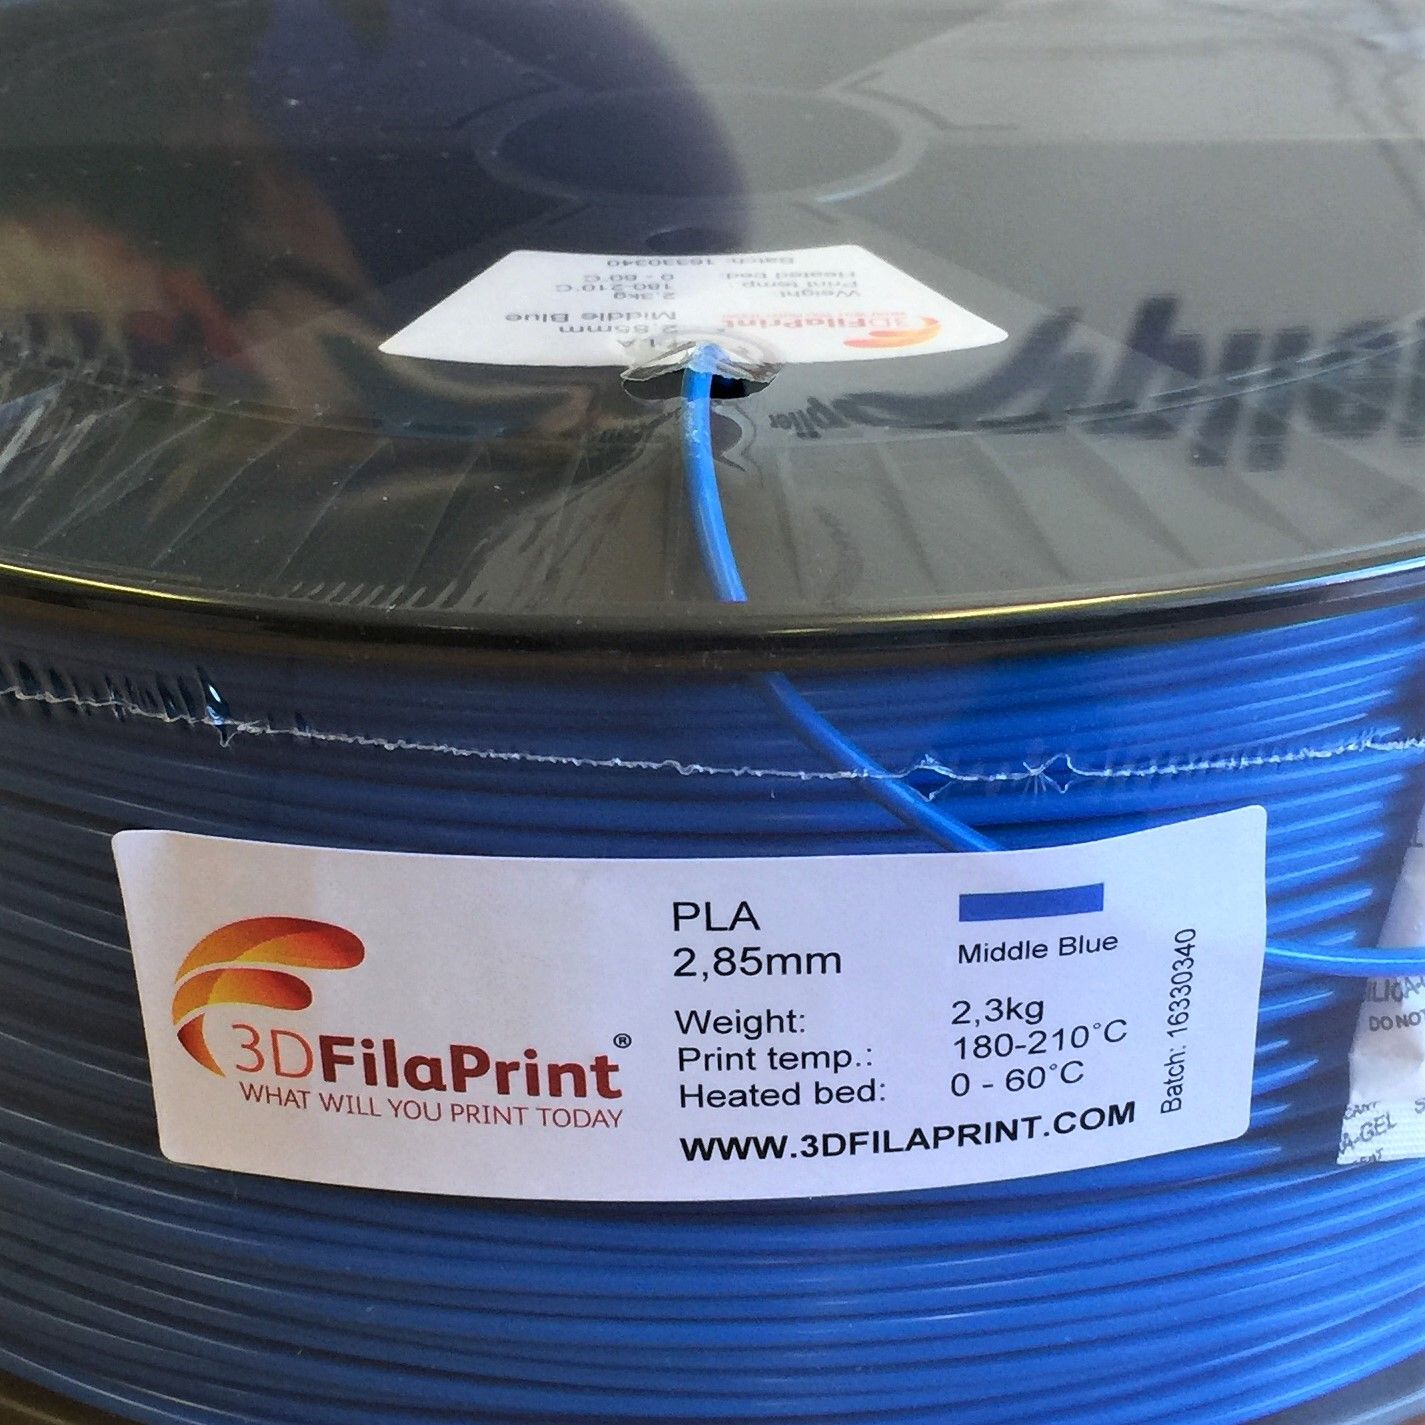 2.3KG 3D FilaPrint Middle Blue Premium PLA 2.85mm 3D Printer Filament